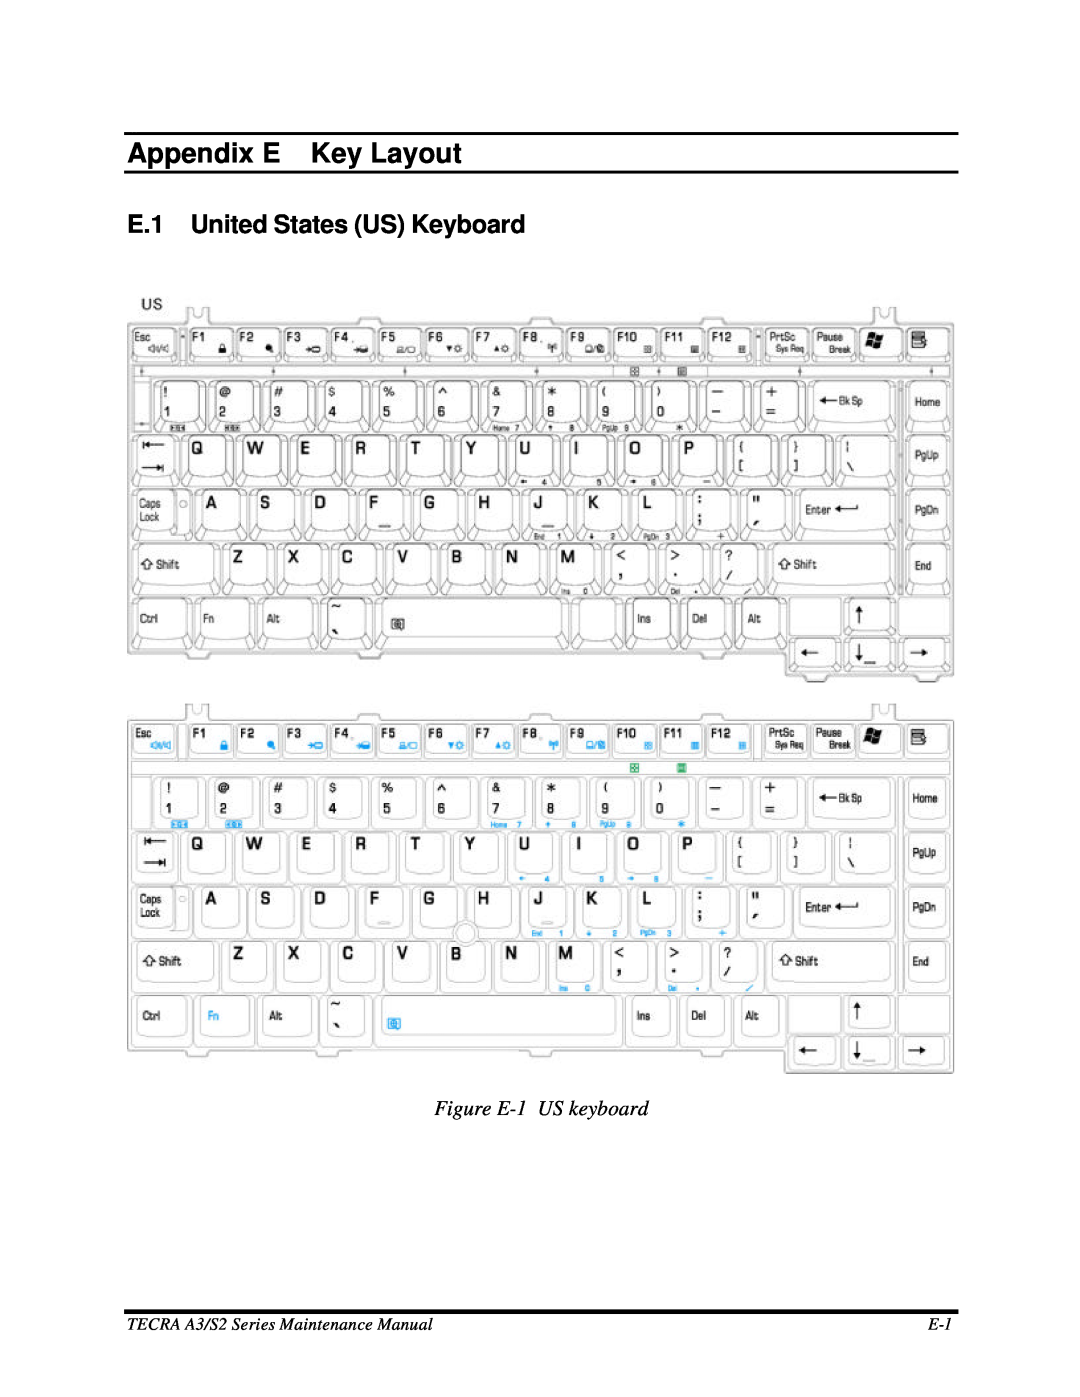 Toshiba S2 manual Appendix E Key Layout, E.1 United States US Keyboard, Figure E-1 US keyboard 